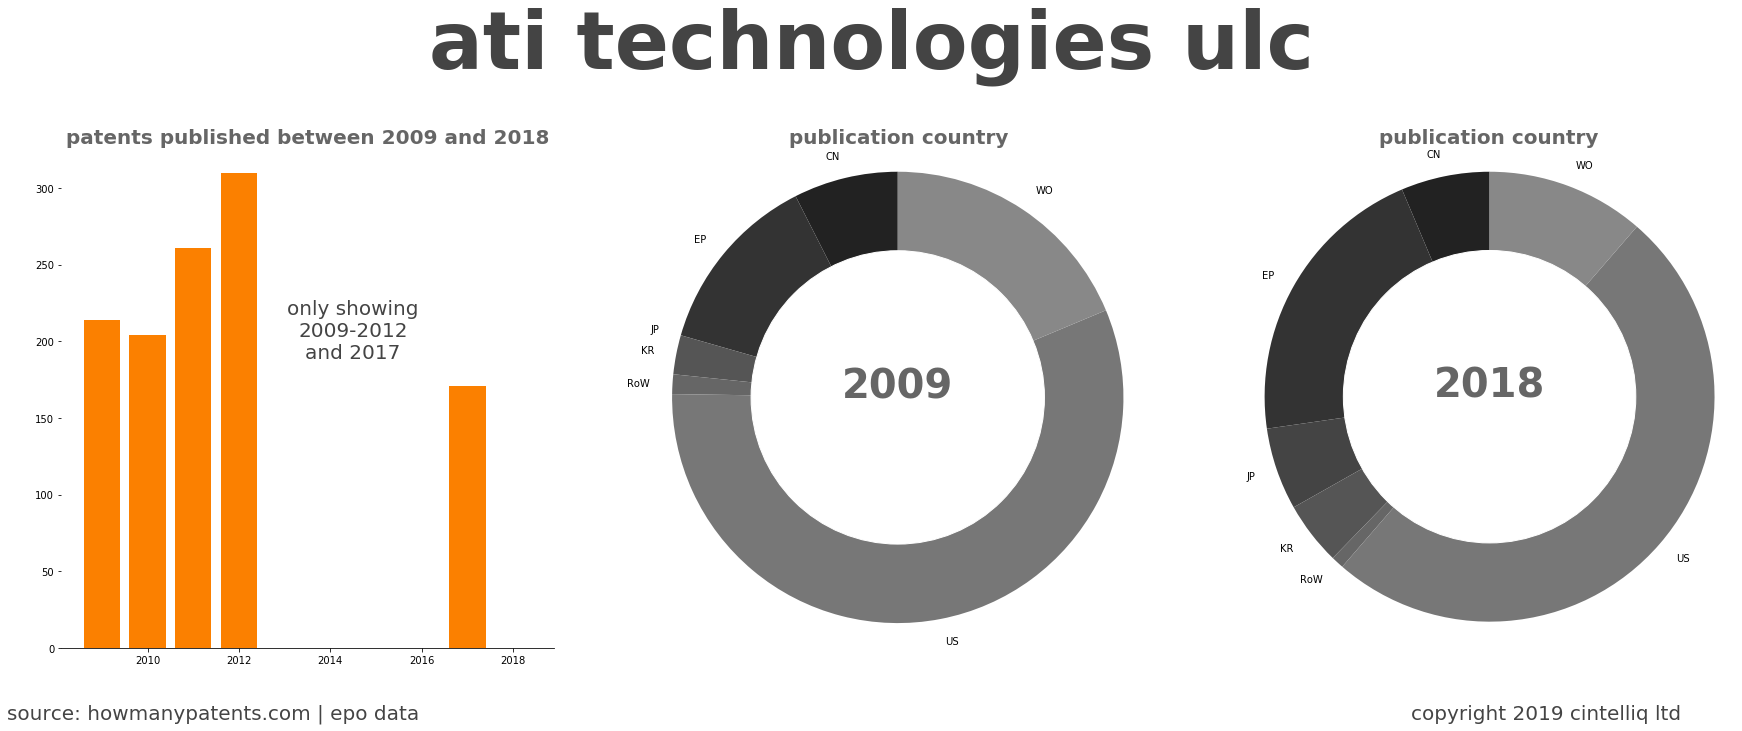 summary of patents for Ati Technologies Ulc